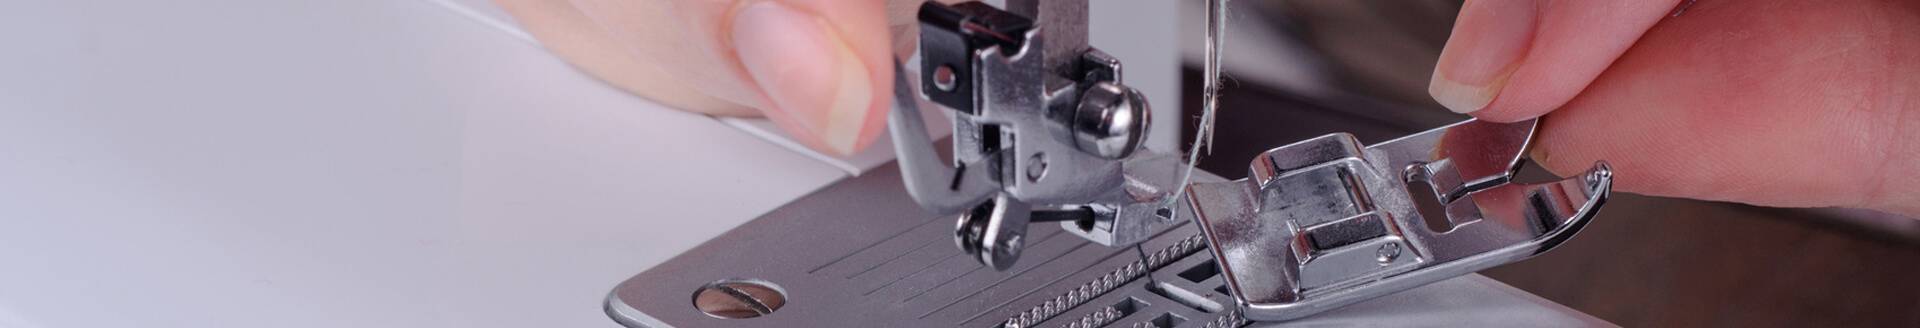 Venta online de prensatelas para máquinas de coser domésticas